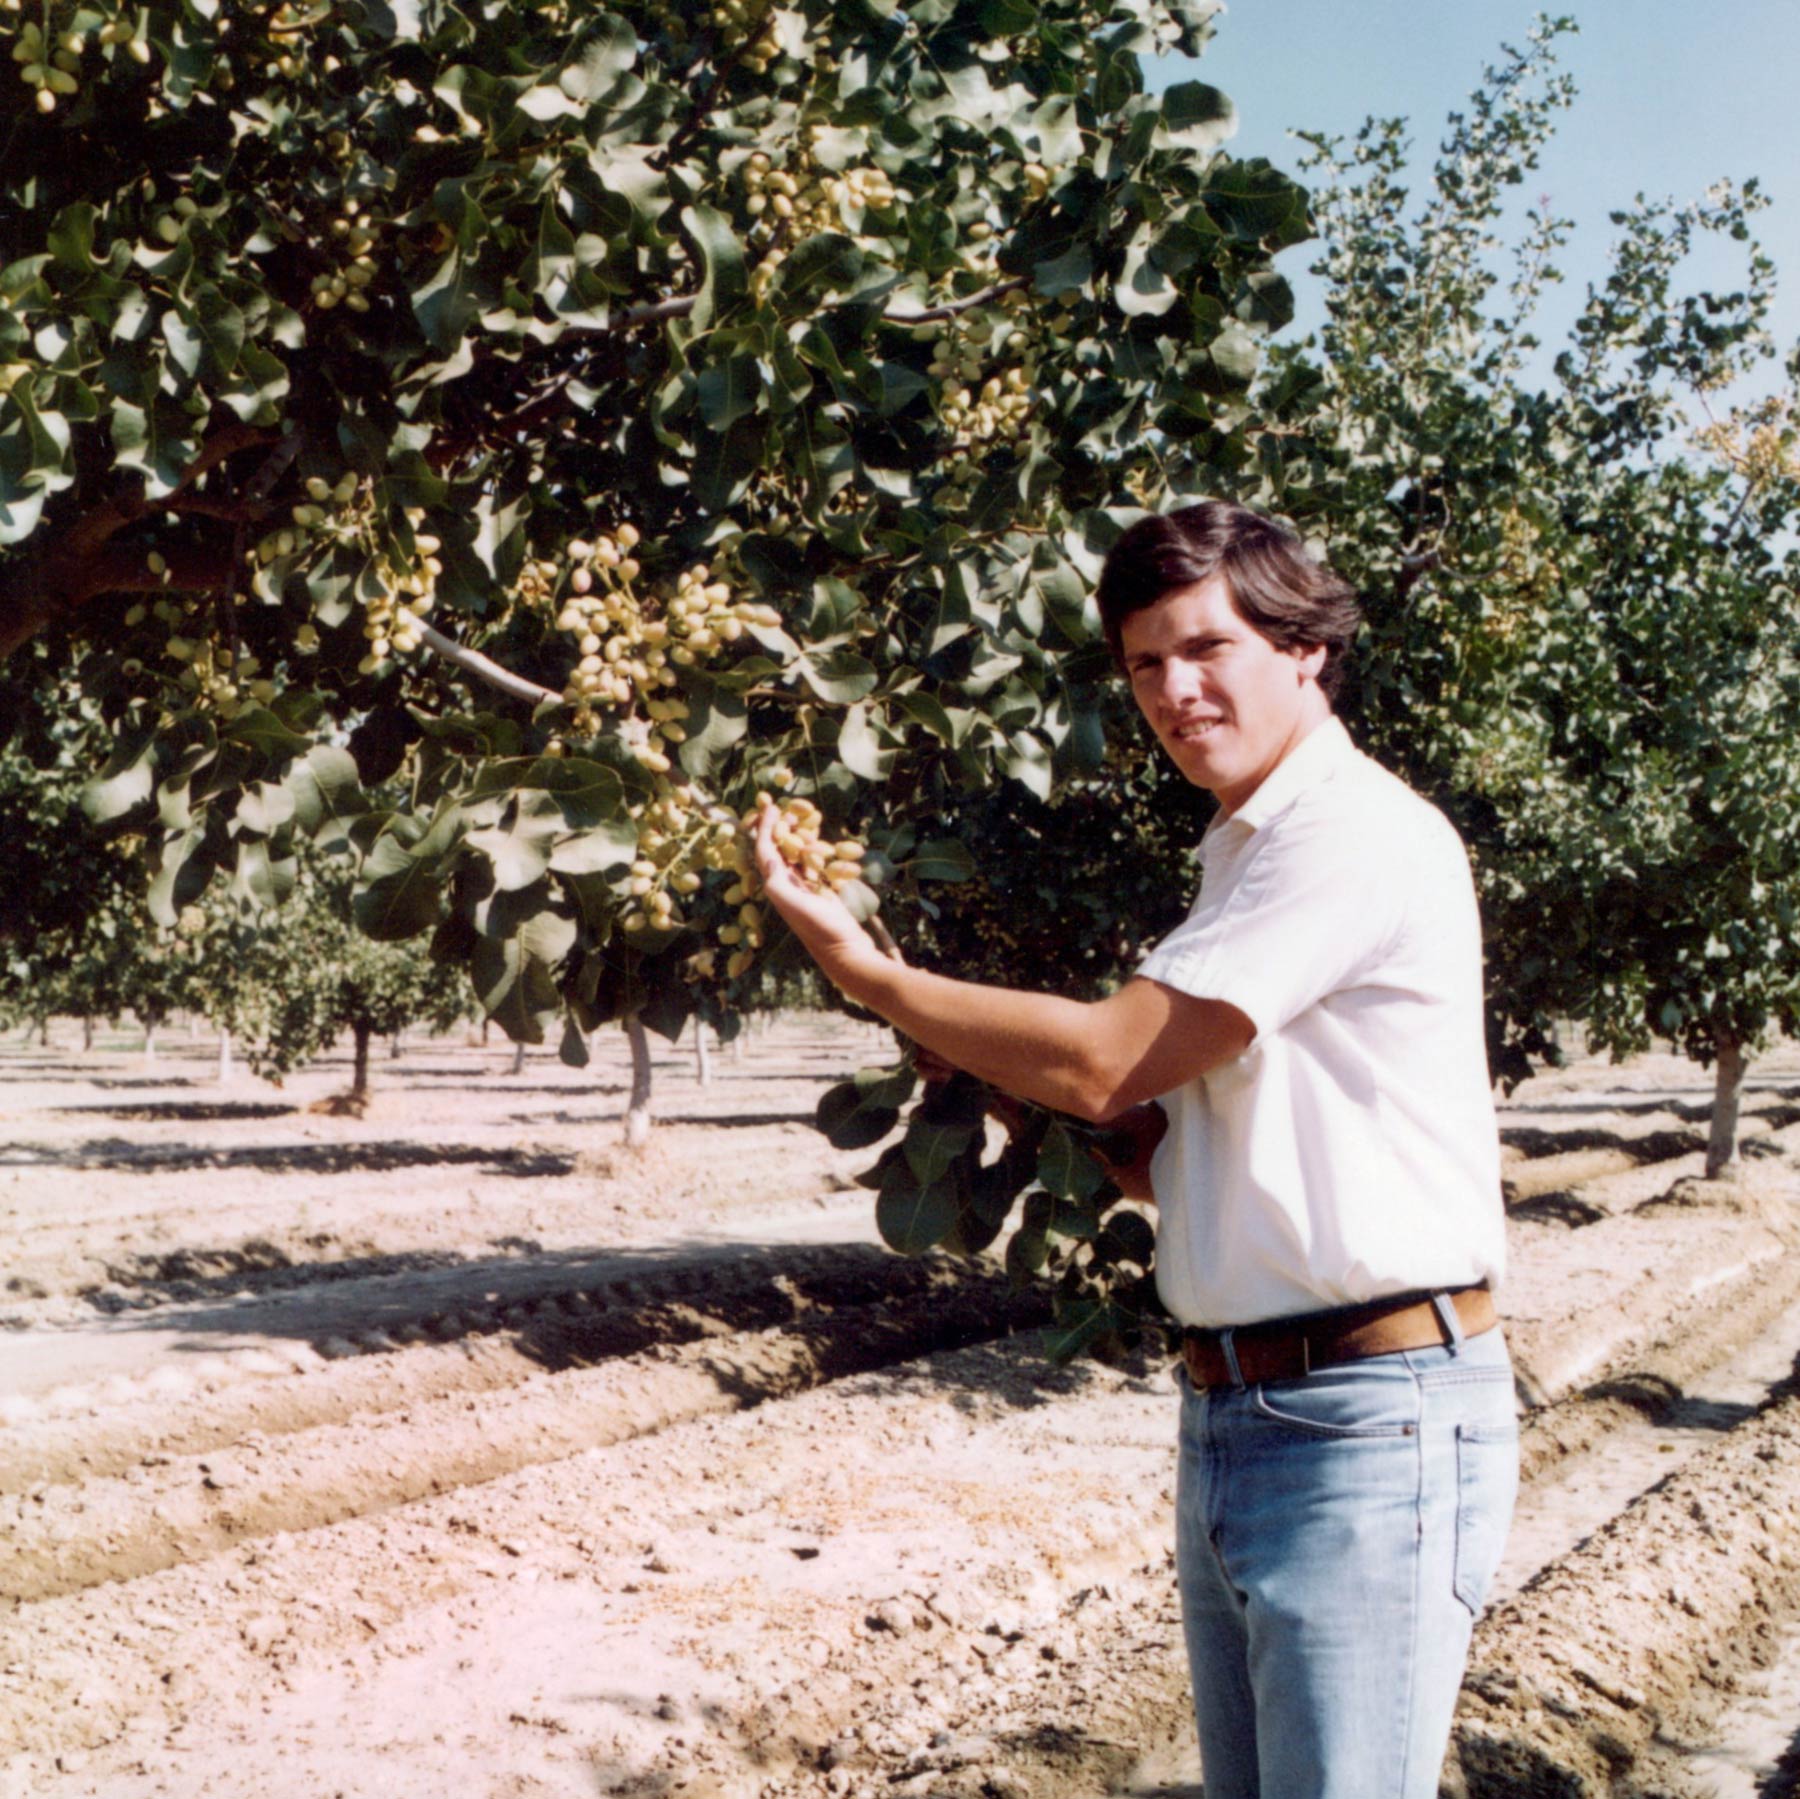 Charles Keenan examining pistachios from a tree